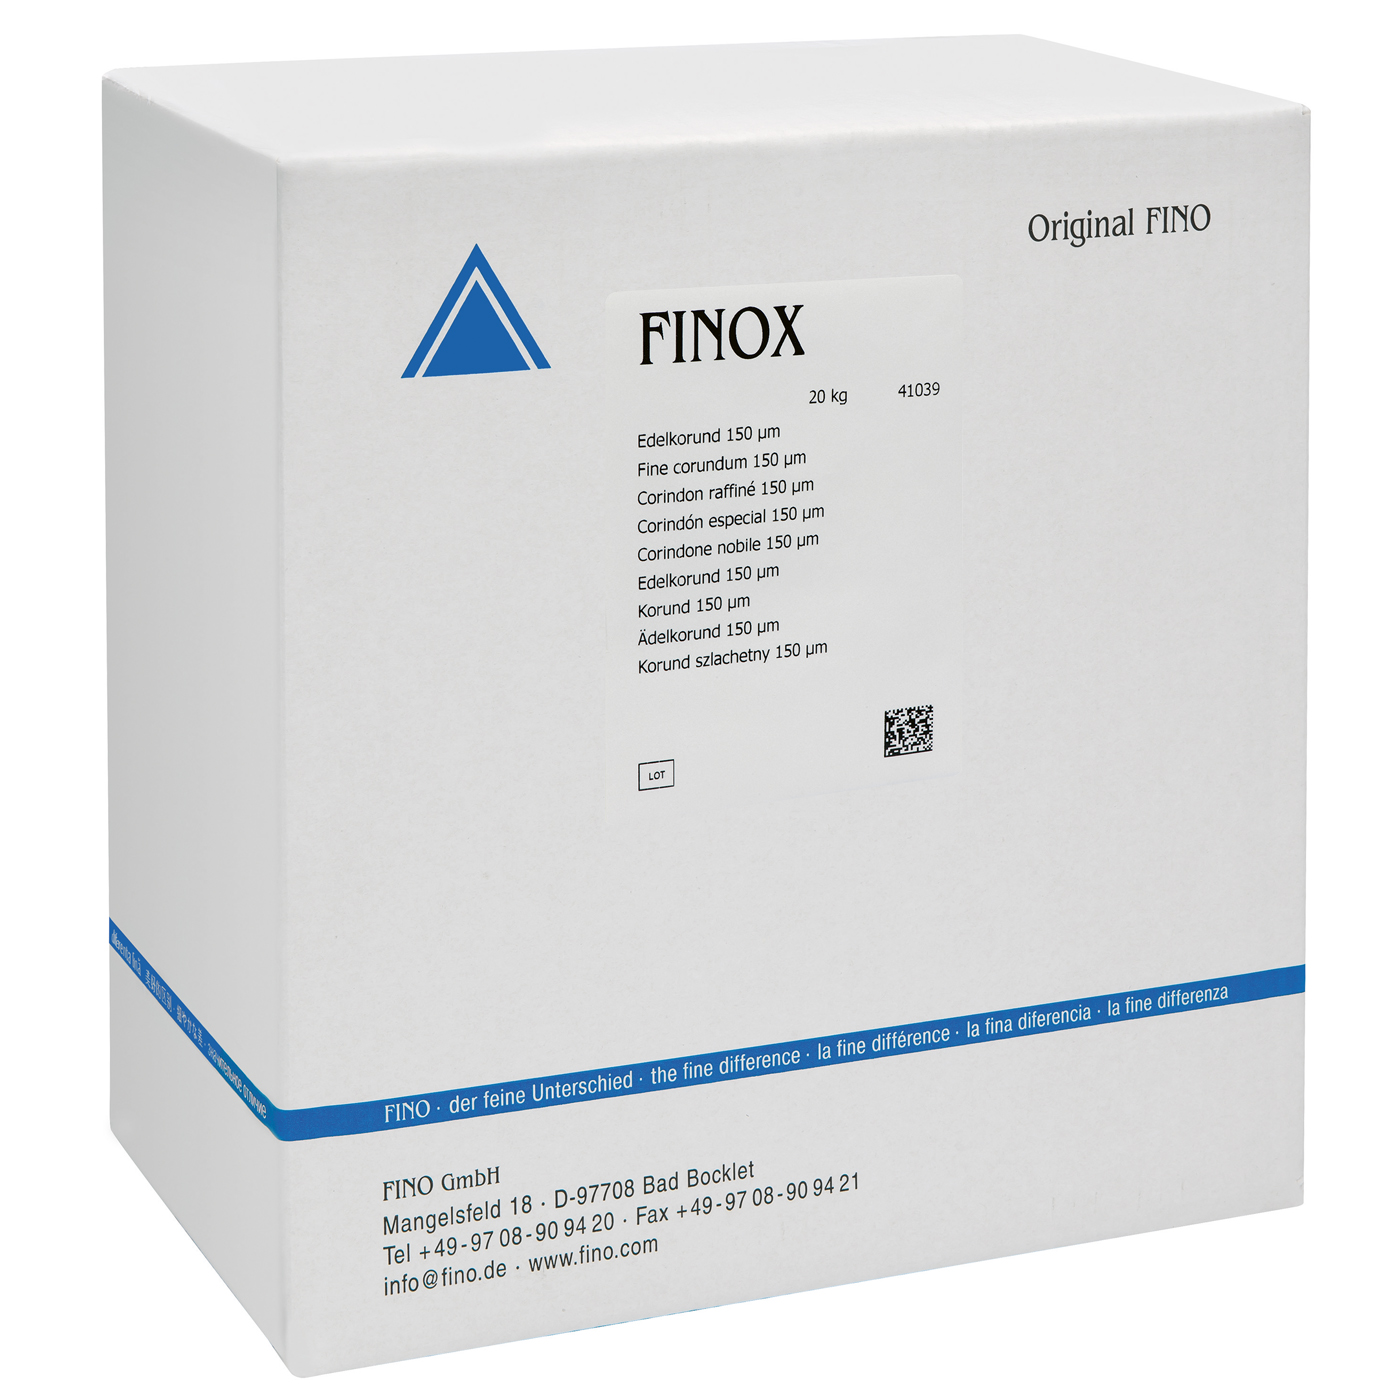 FINOX High-Grade Corundum, 150 µm - 20 kg